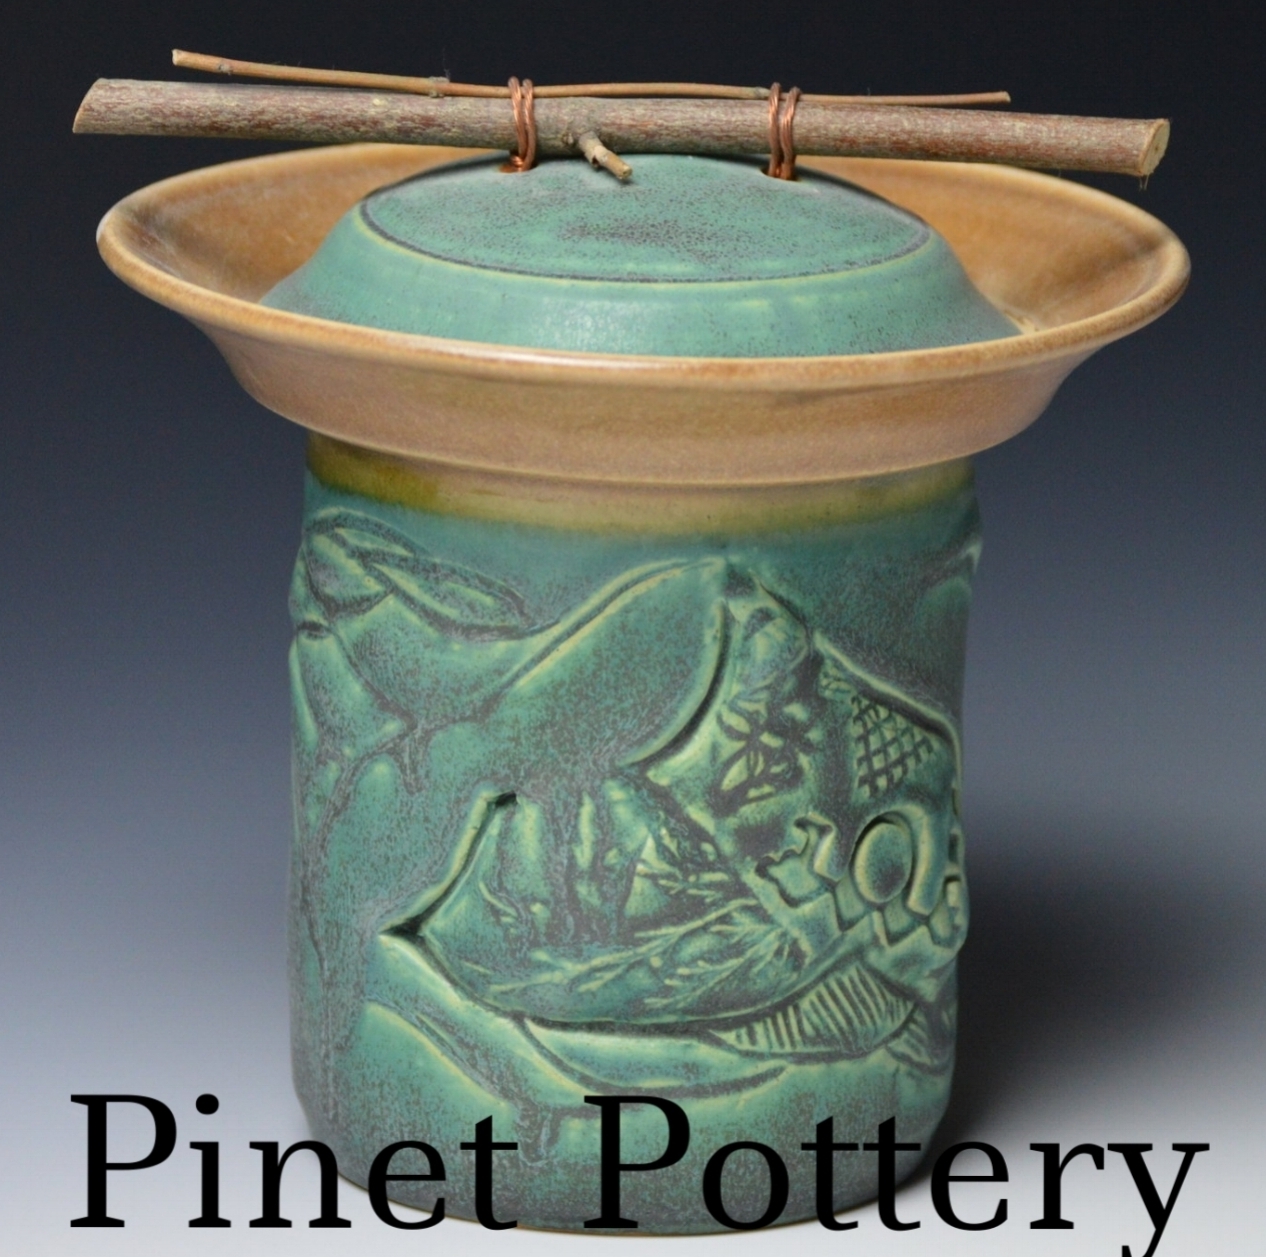  Pinet Pottery